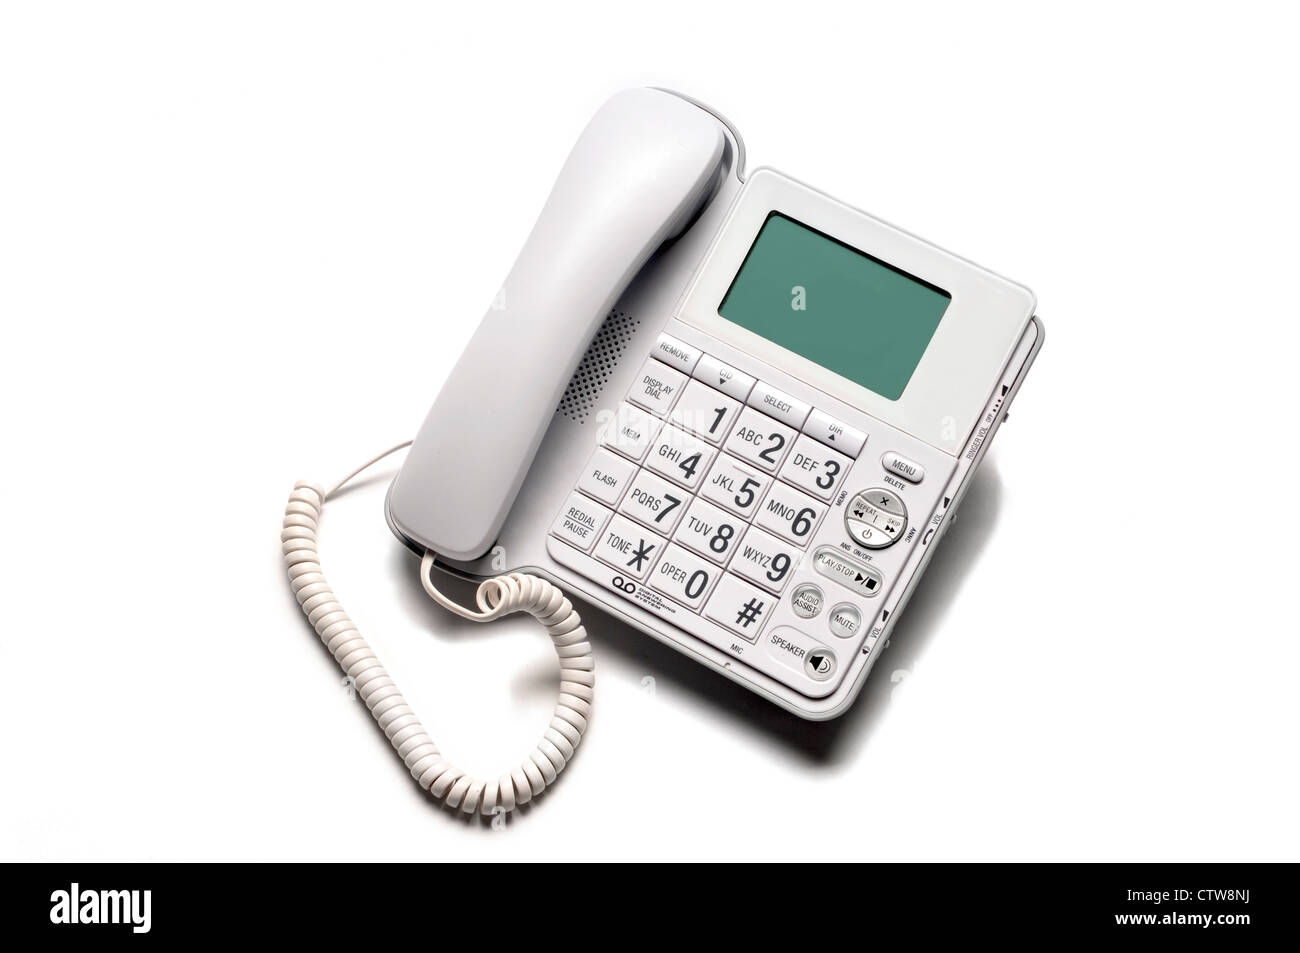 Large button telephone answering machine on white background Stock Photo